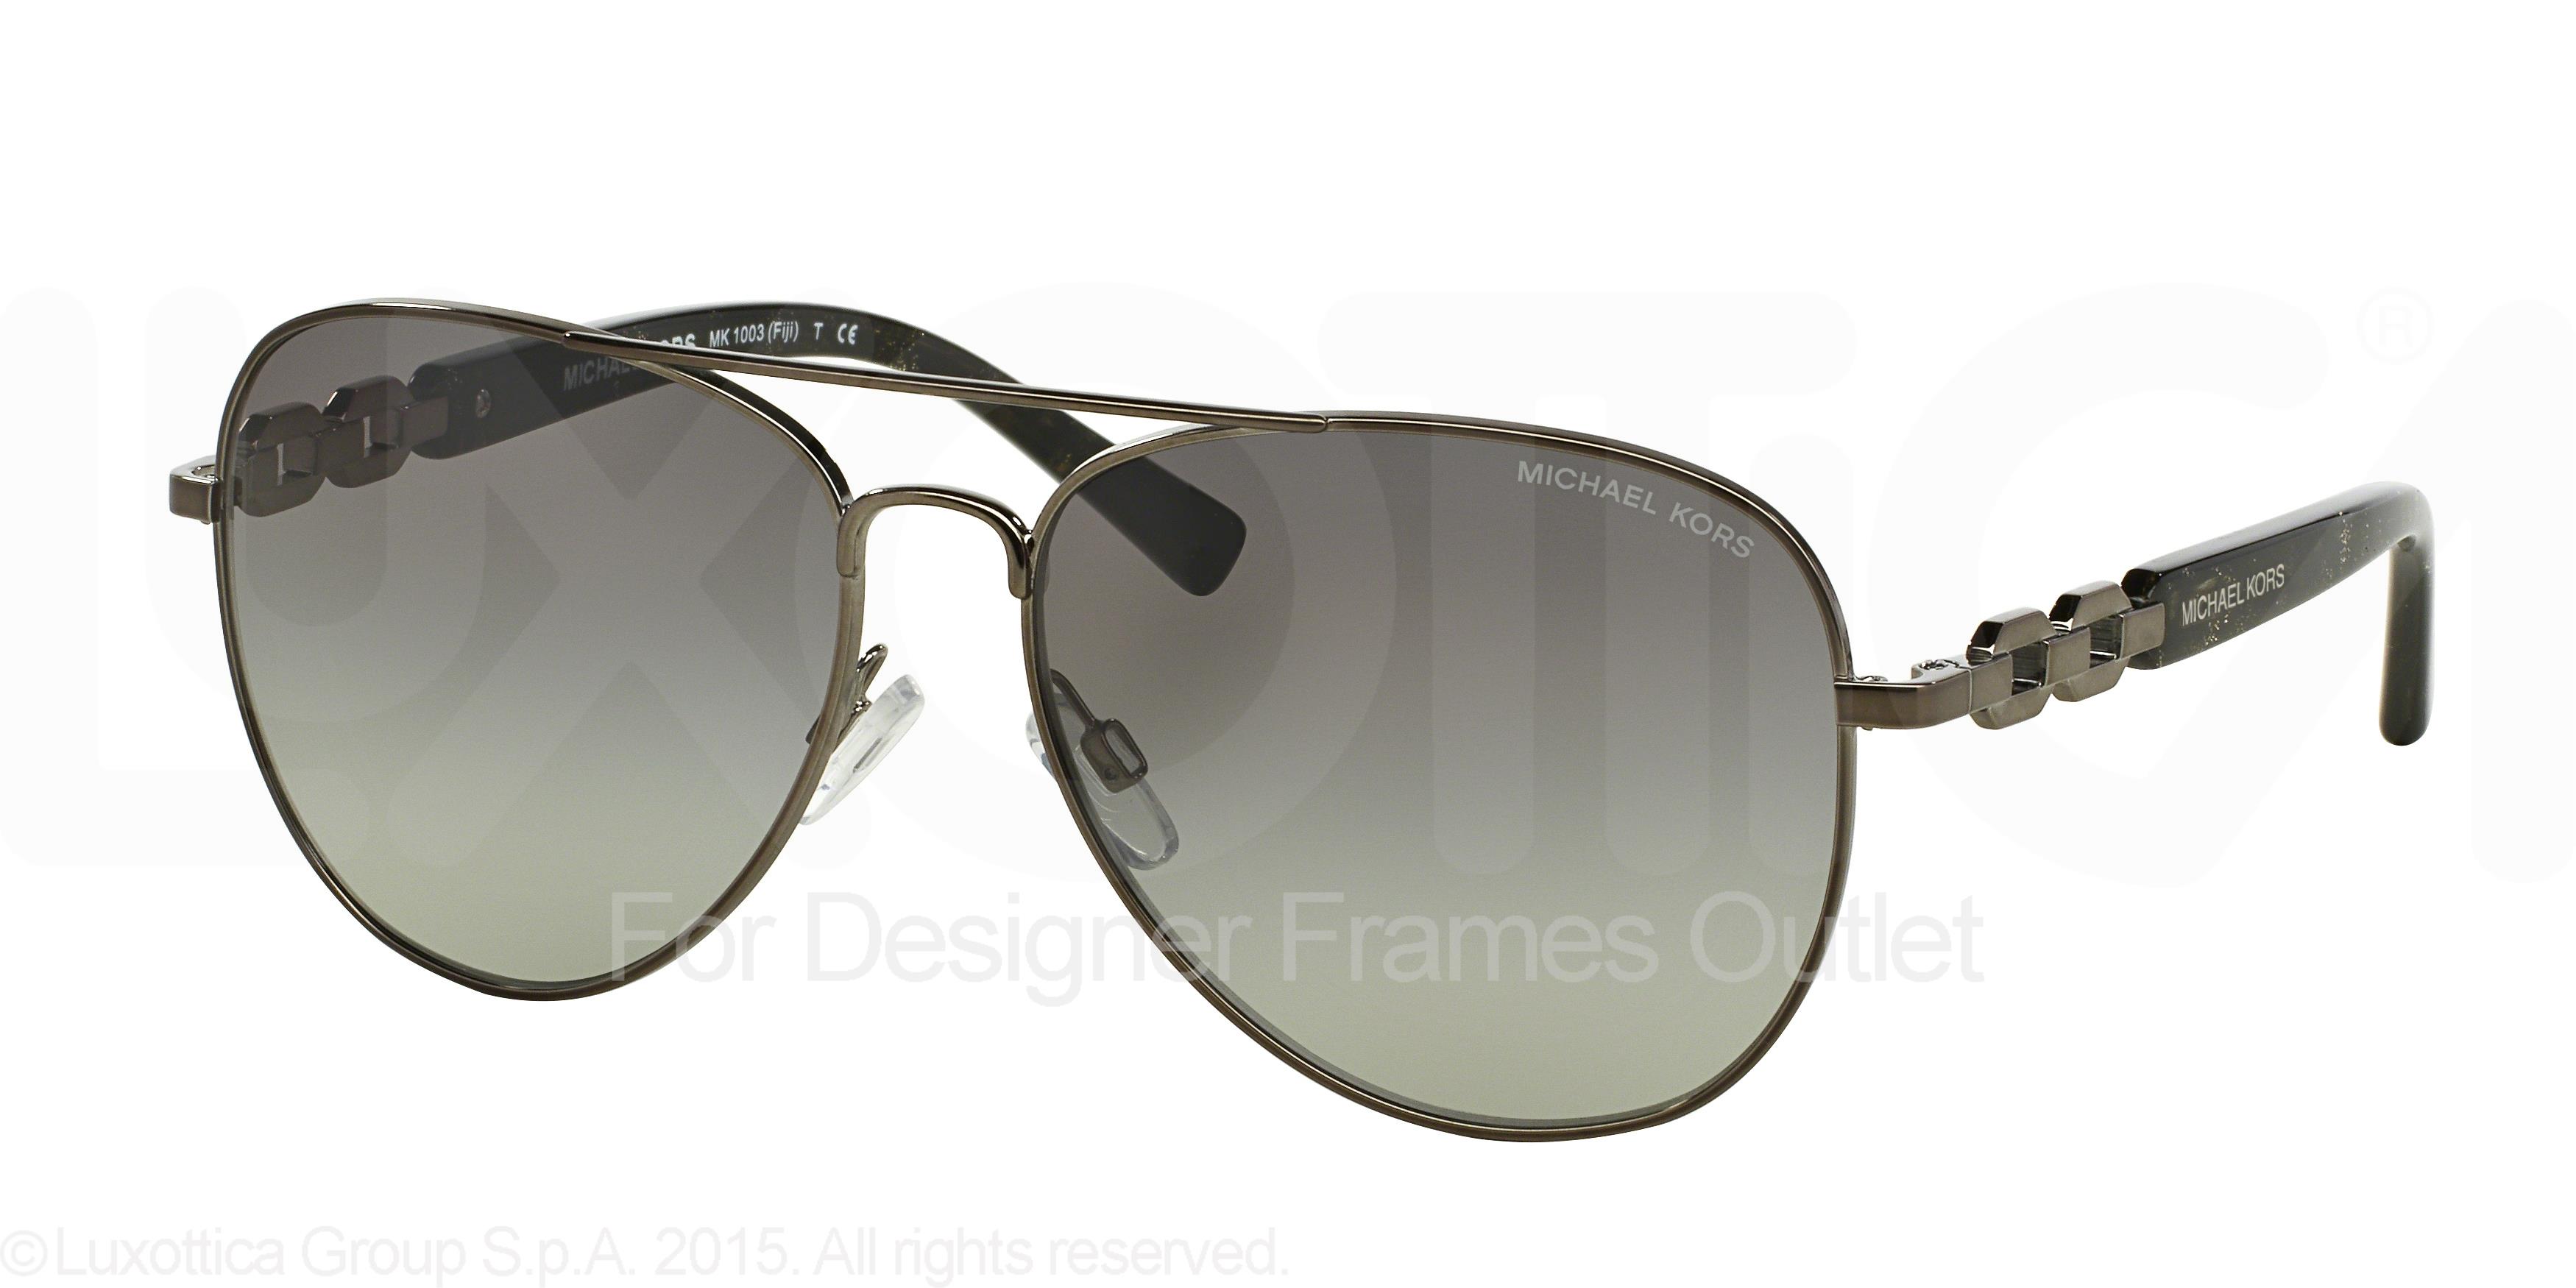 Picture of Michael Kors Sunglasses MK1003